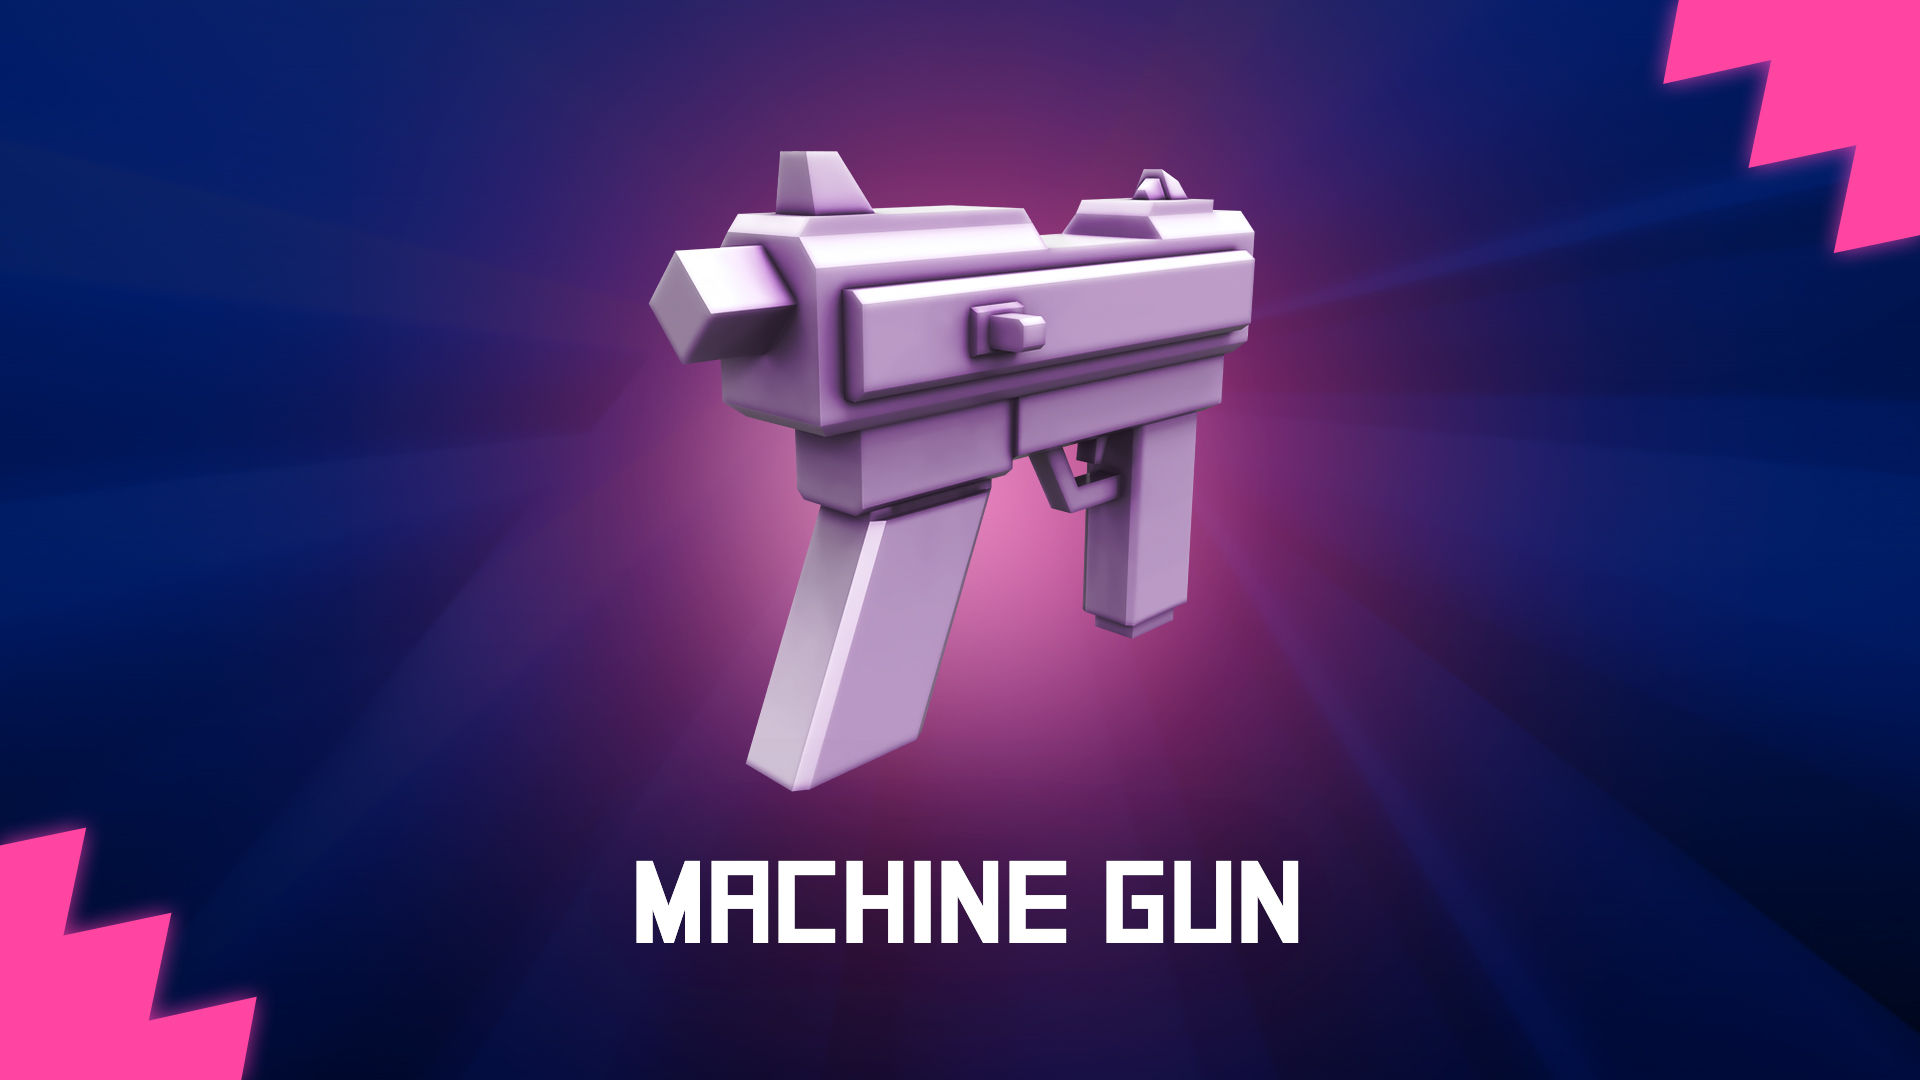 Machine gun